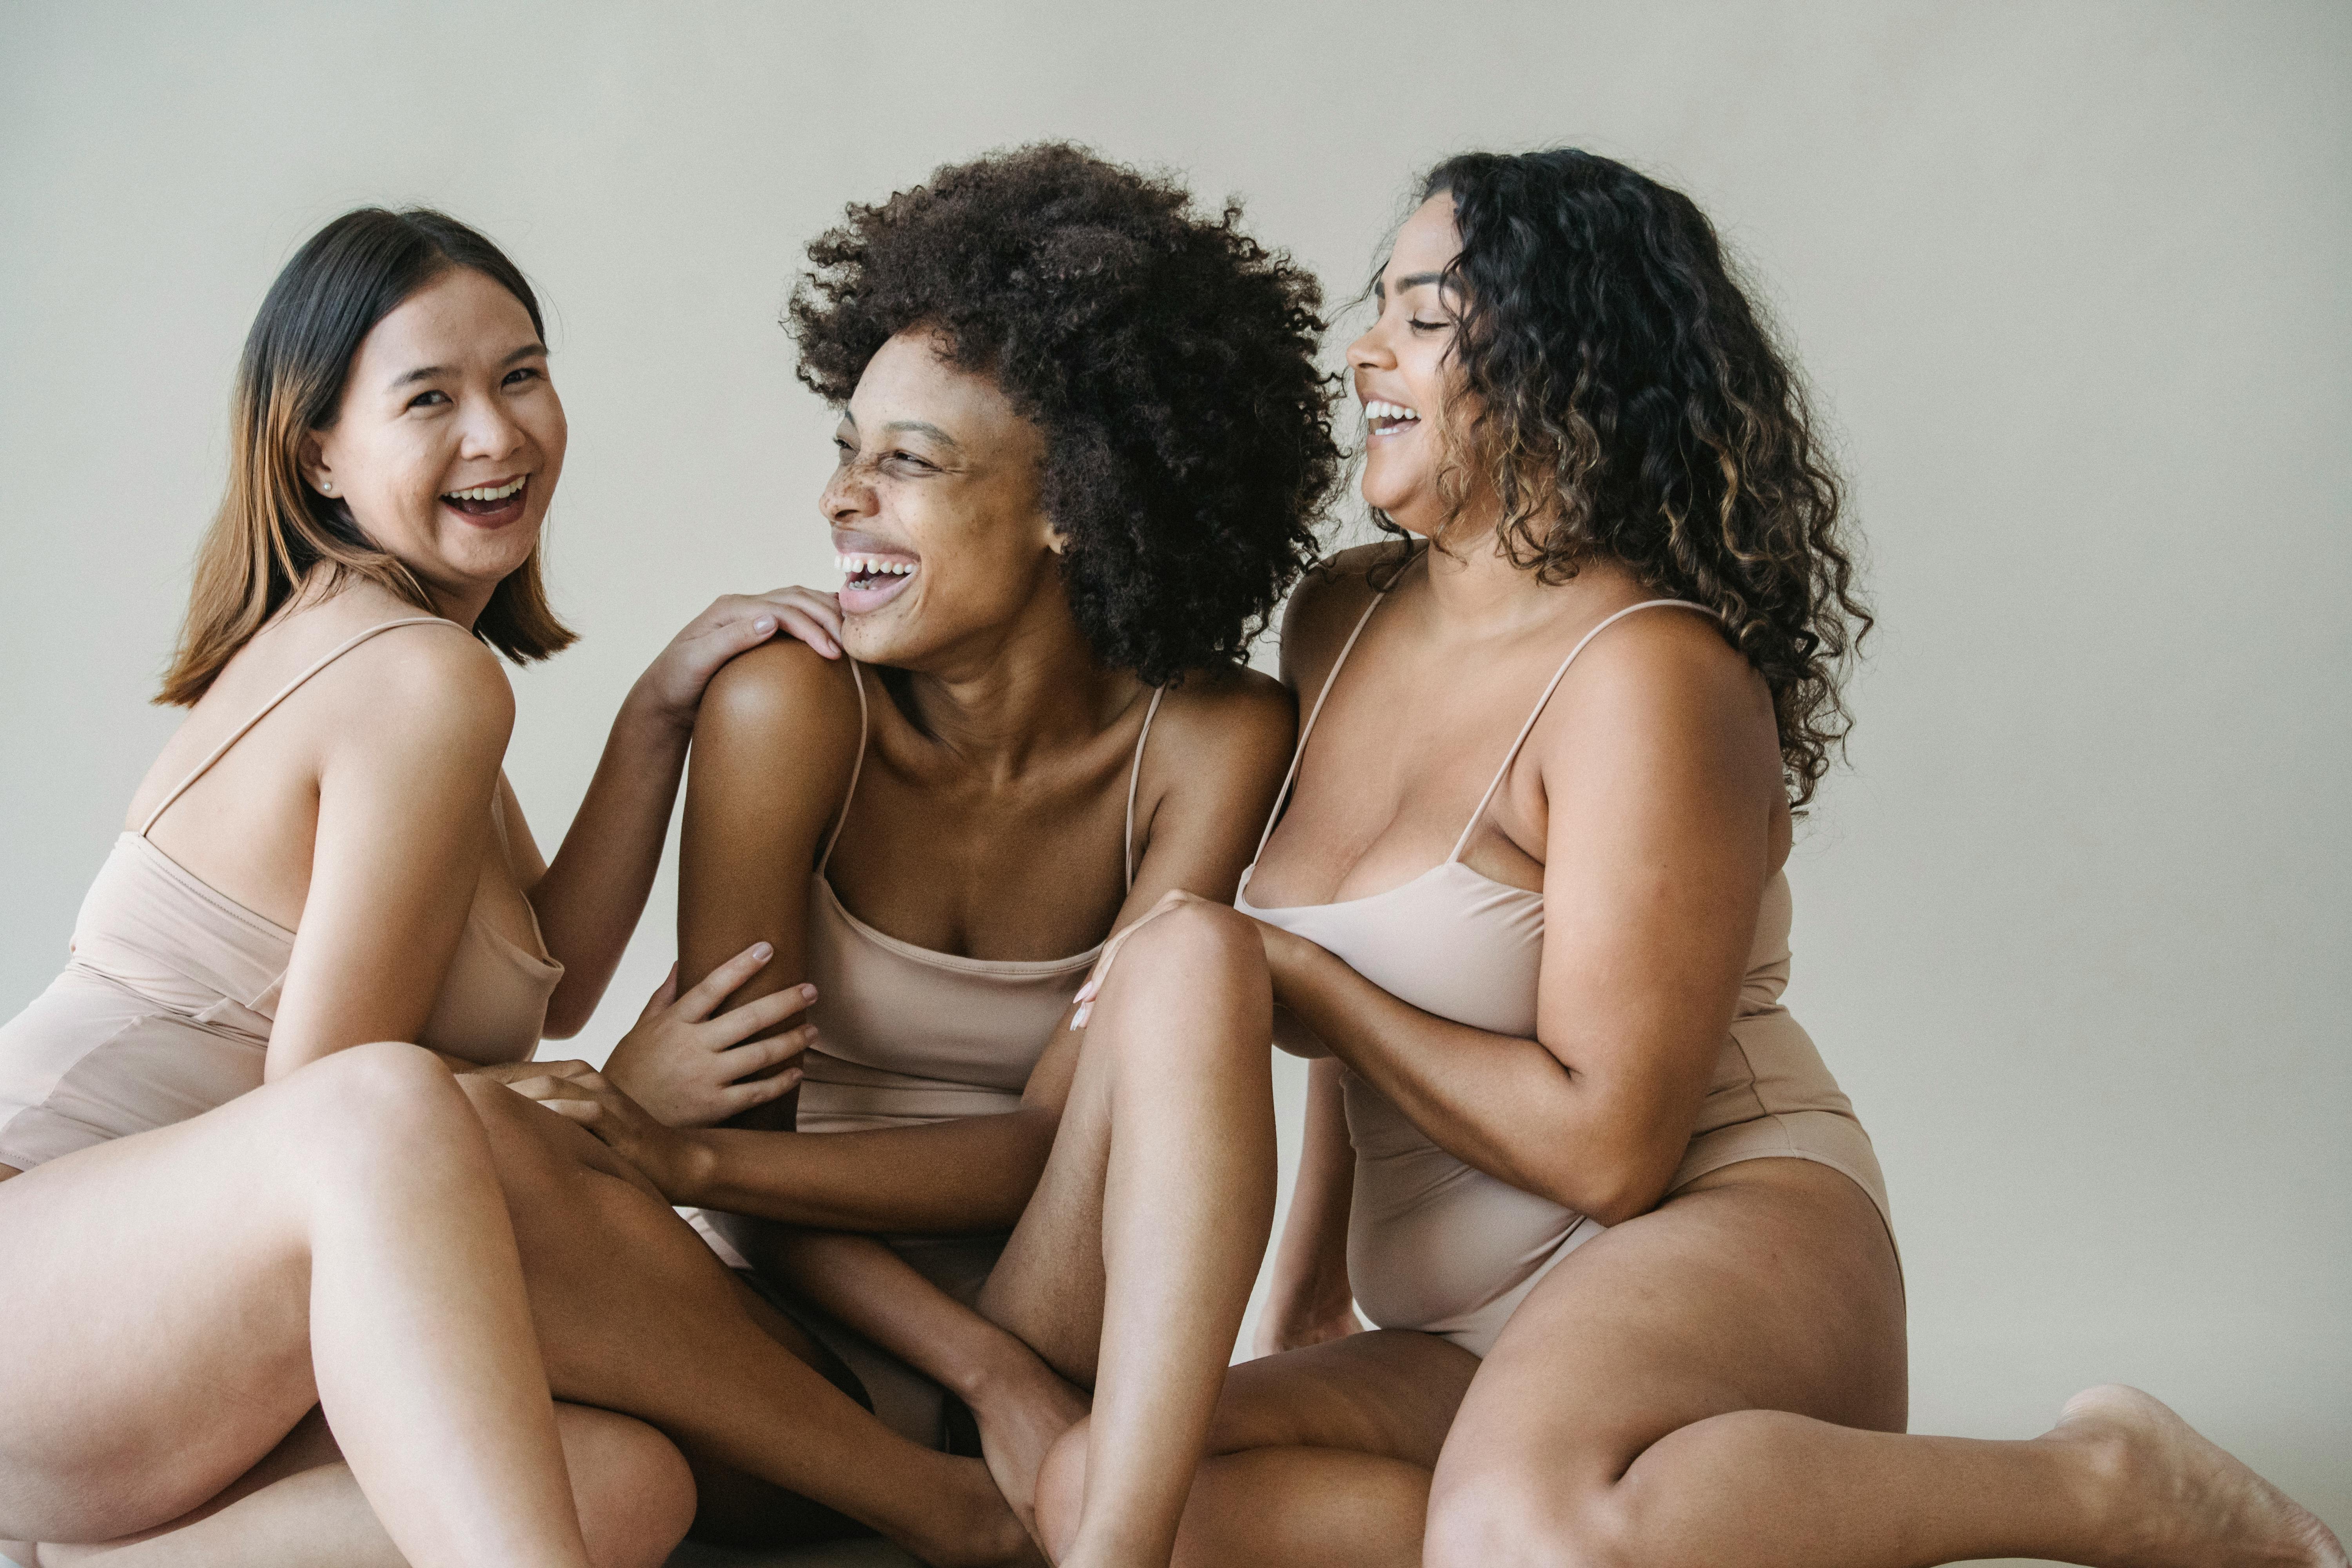 Happy Diverse Women in Lingerie in Studio · Free Stock Photo